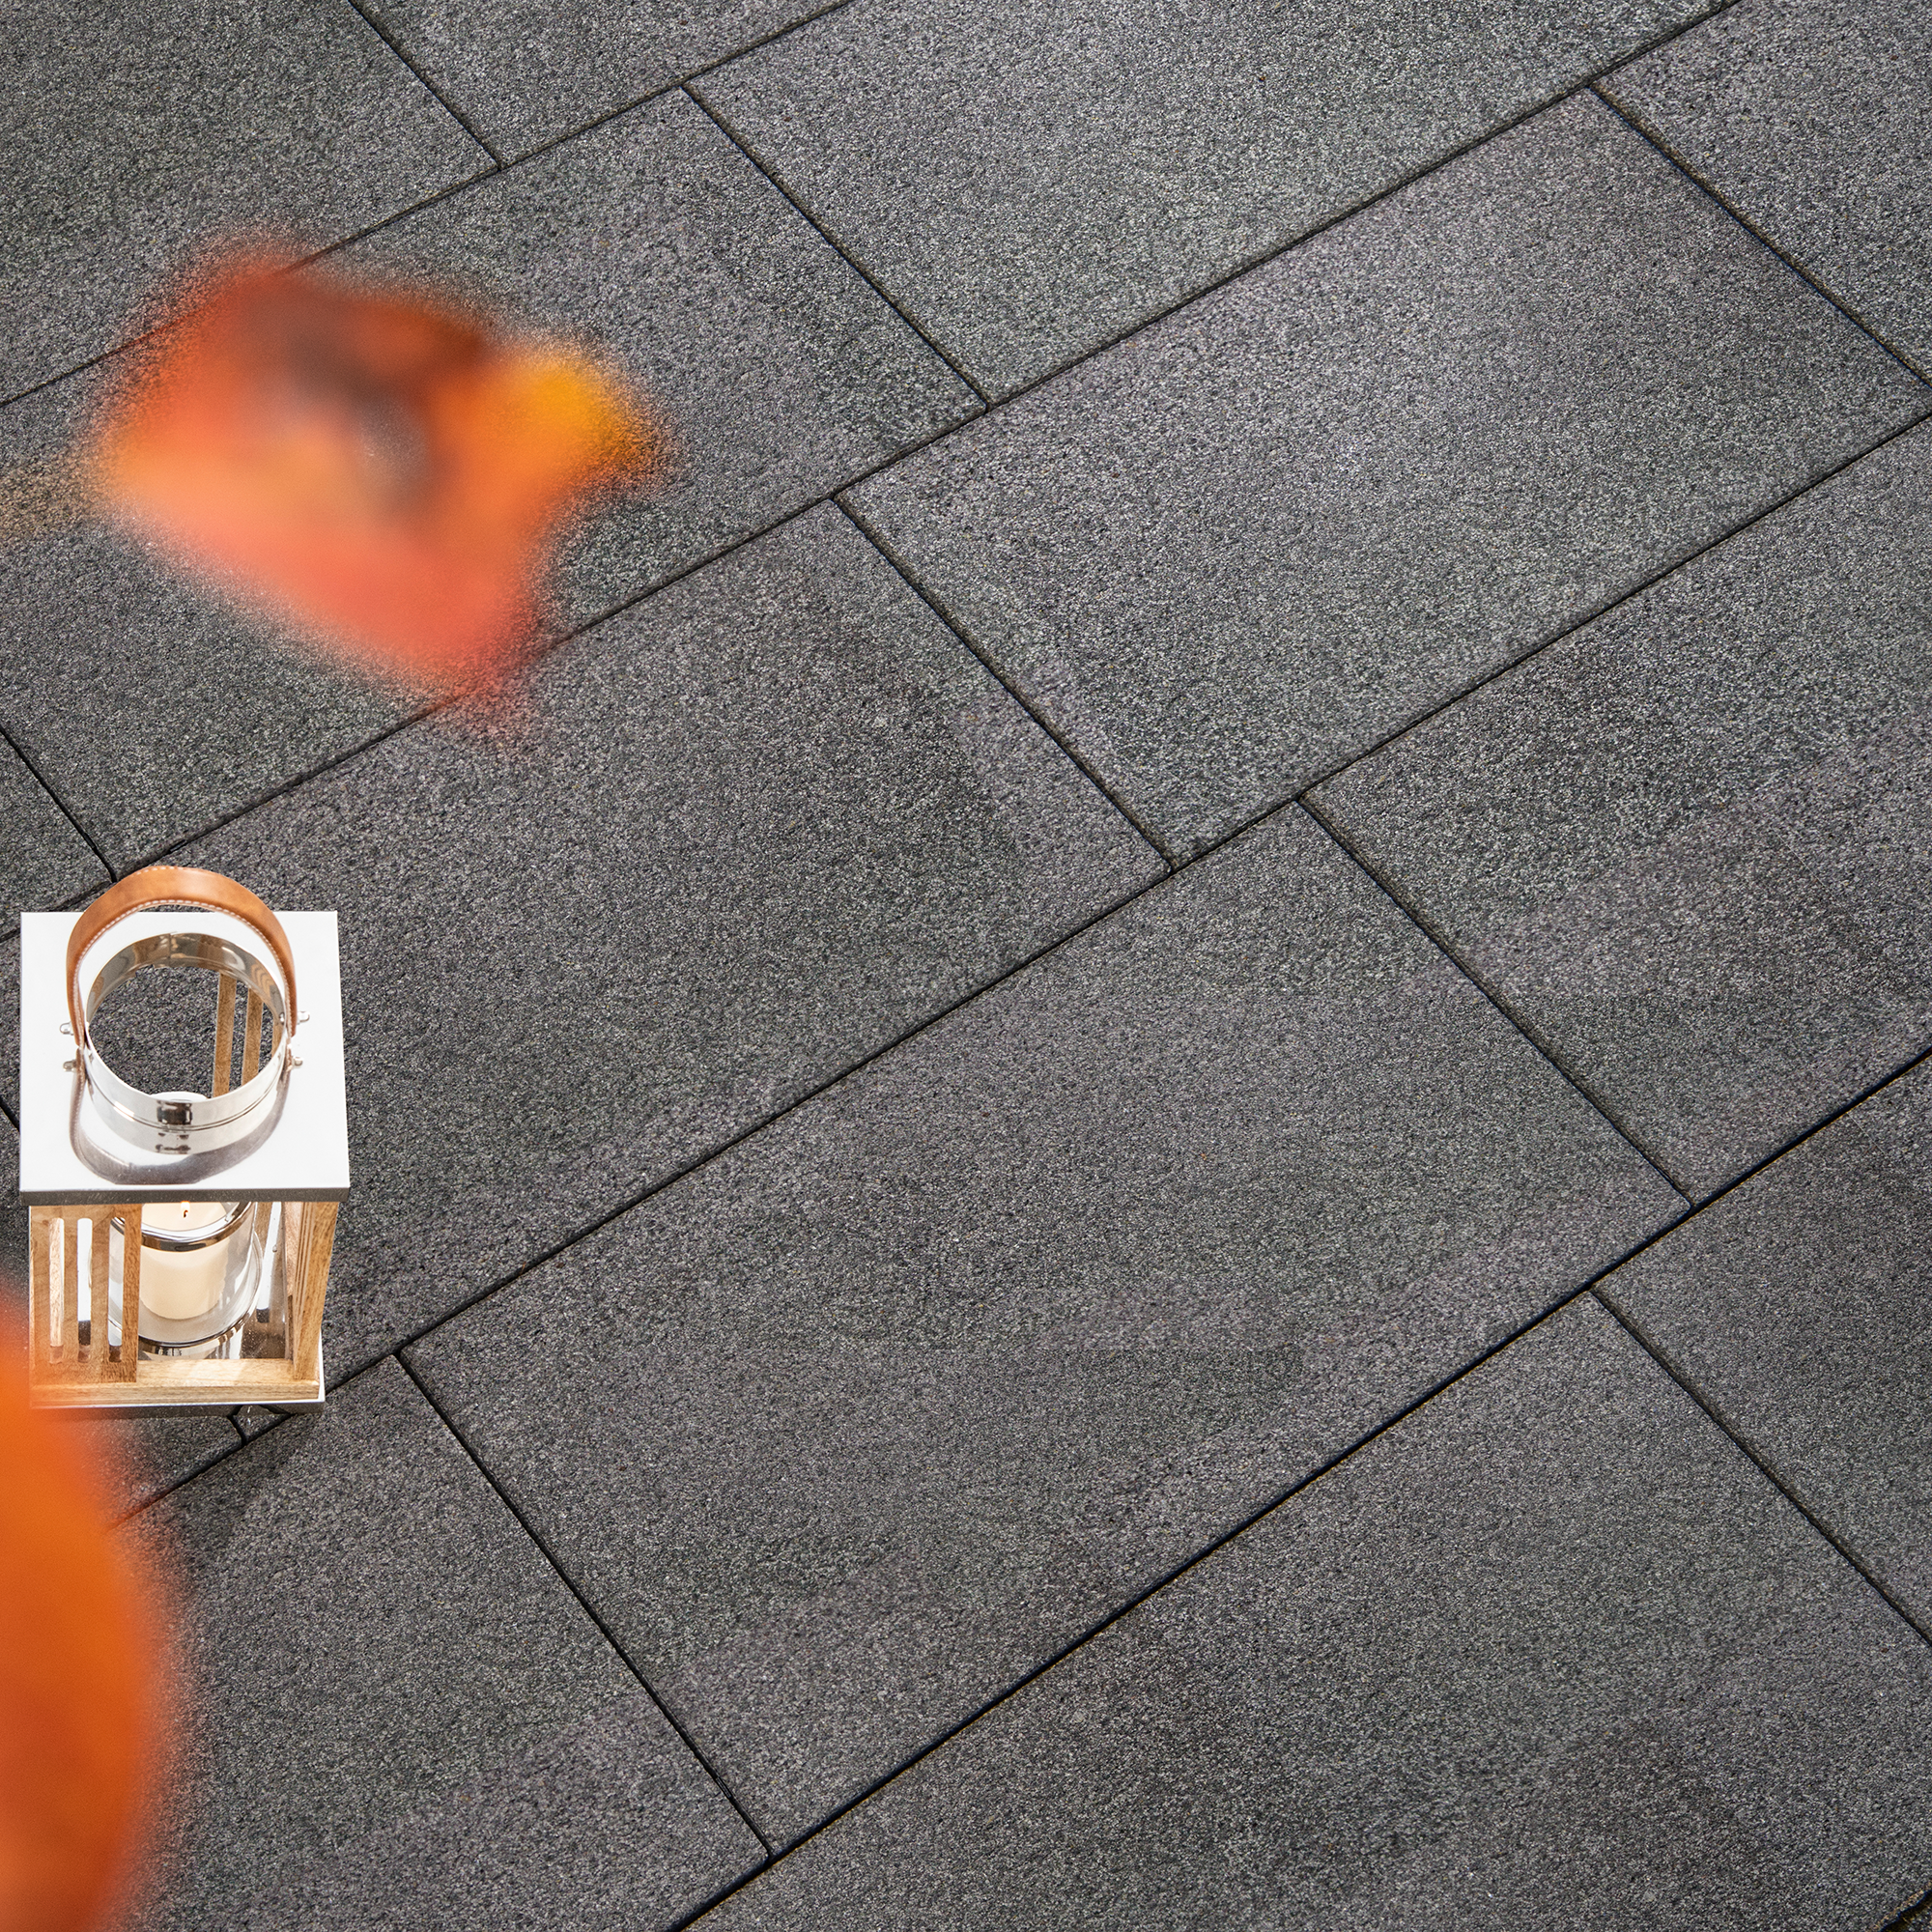 Terrassenplatte 'T-Court Protect' Beton schwarz-basaltfarben 80 x 40 x 4 cm + product picture